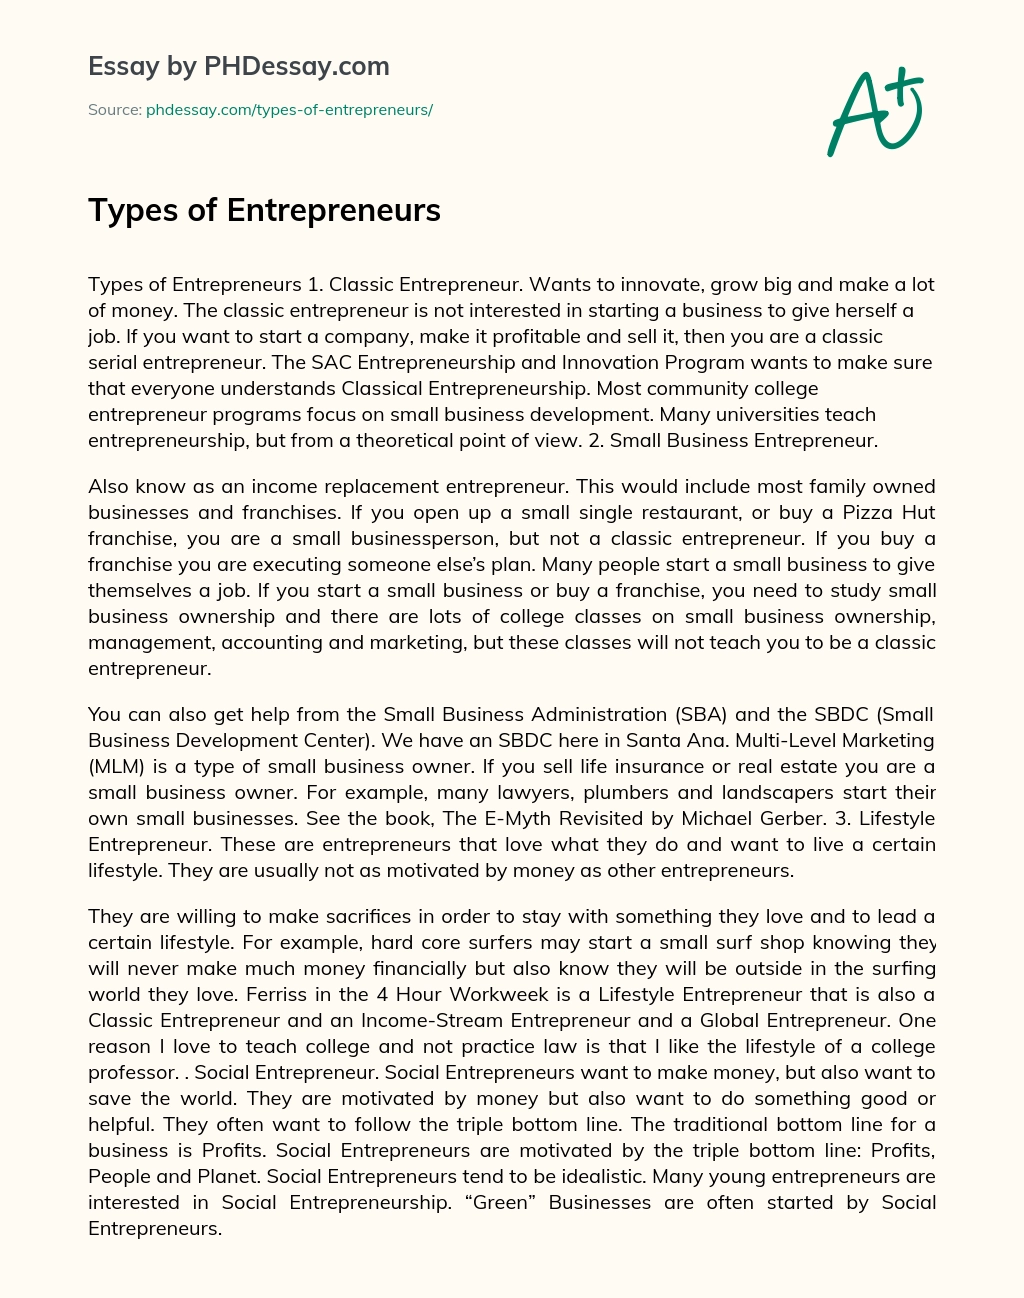 Types of Entrepreneurs essay